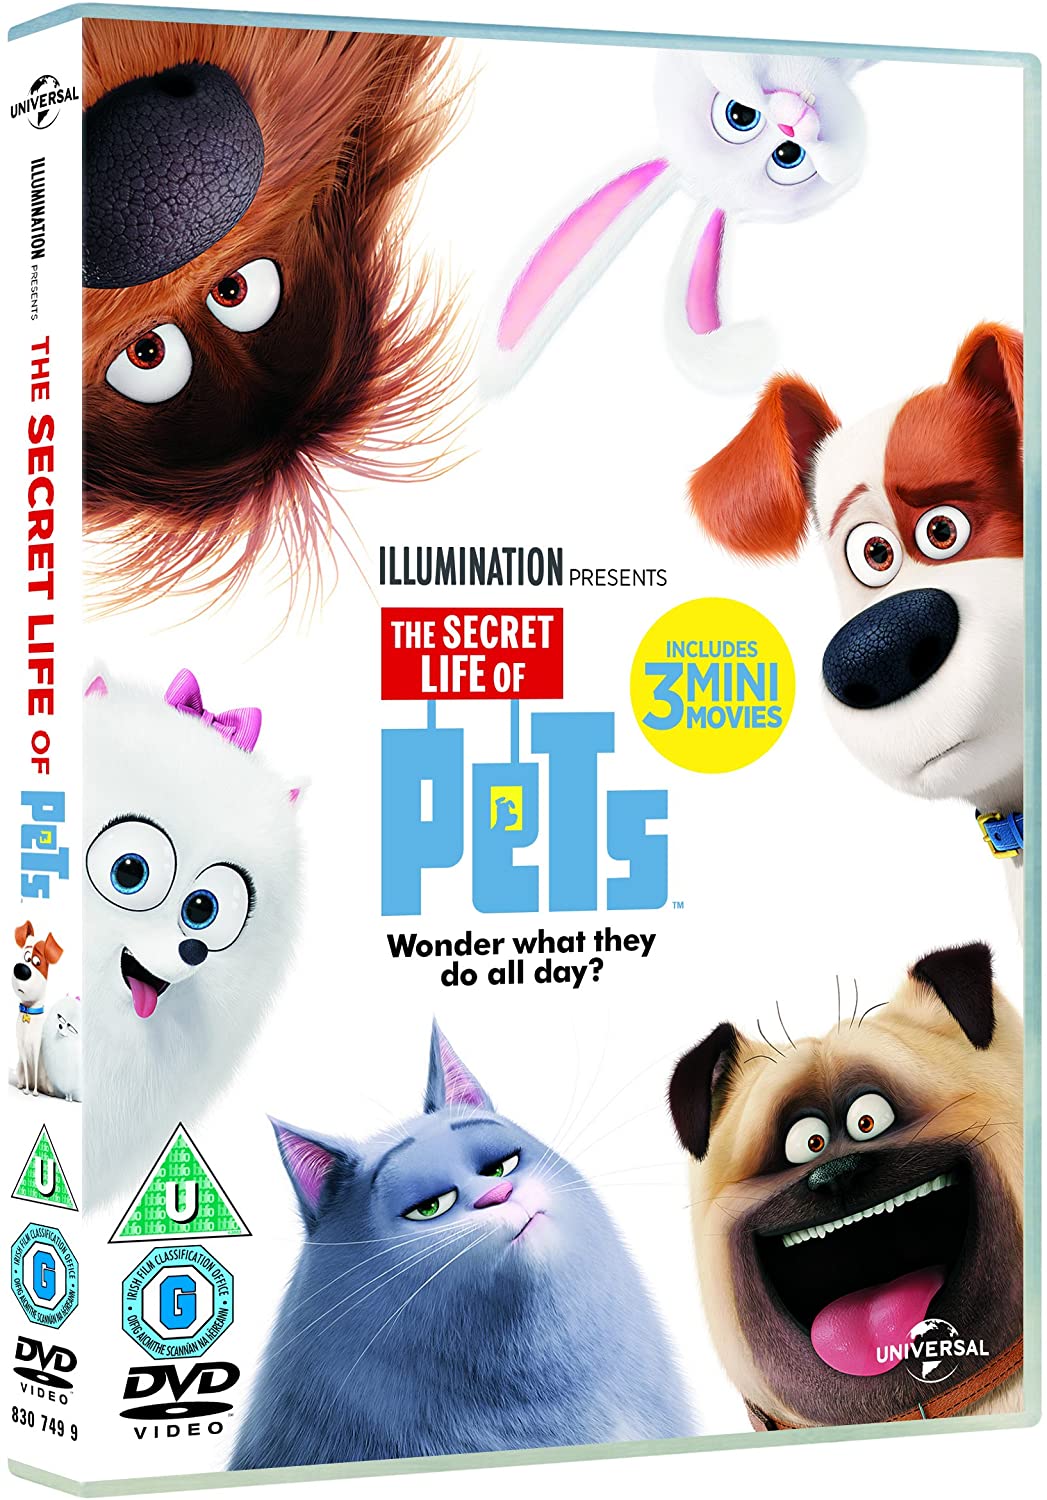 The Secret Life Of Pets [2016] (Illumination) (DVD)